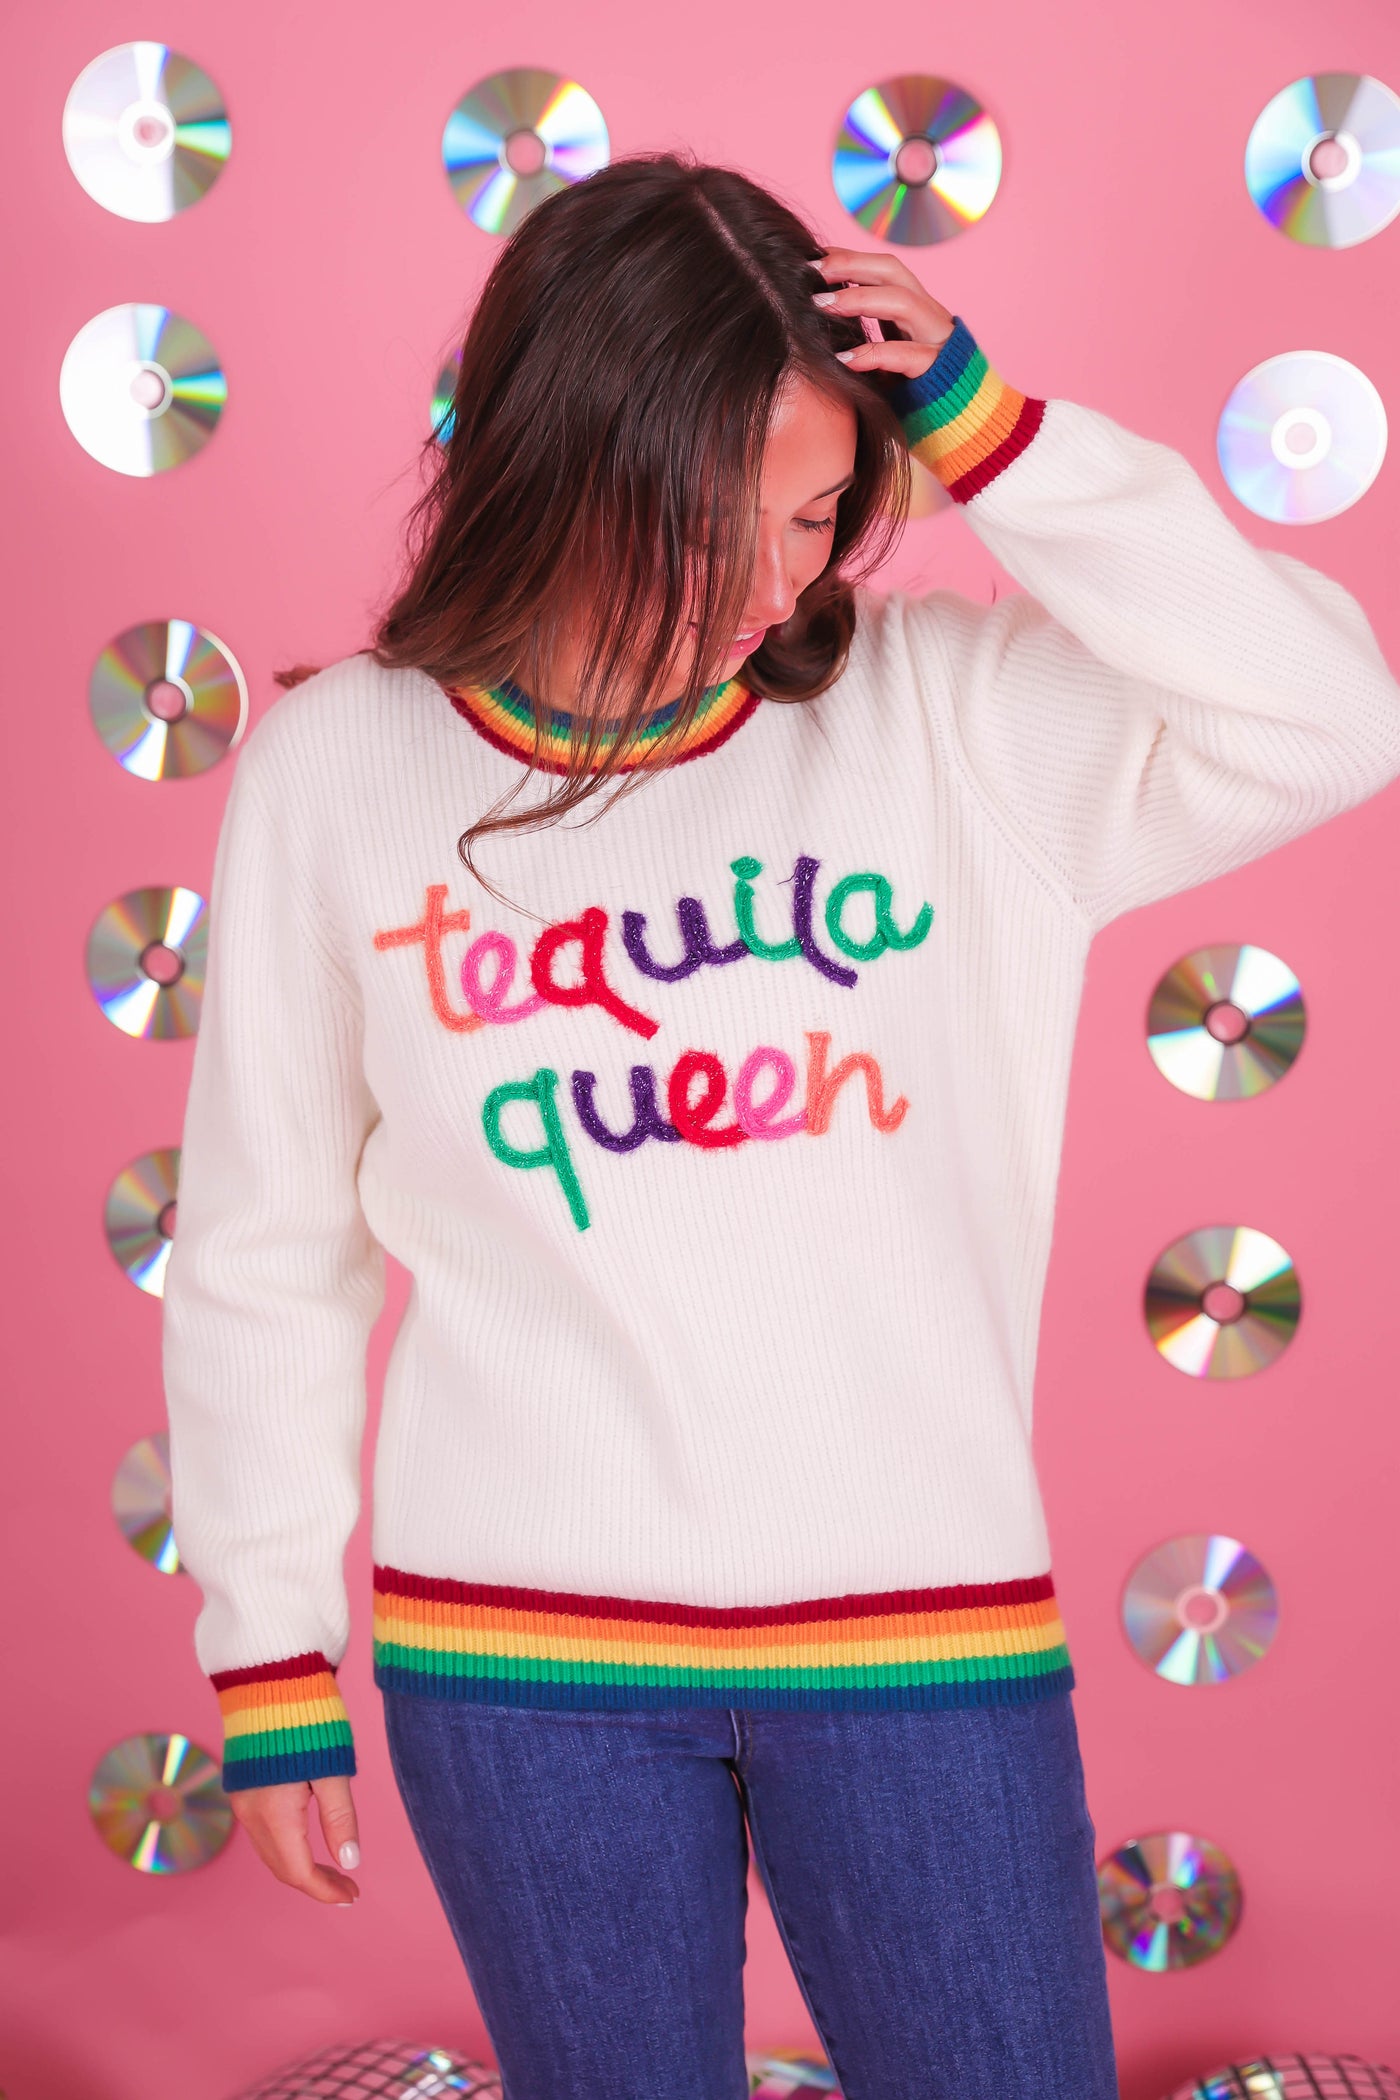 Women's Tequila Queen Sweater- Sparkle Rainbow Tequila Sweater- Main Strip Rainbow Sweater